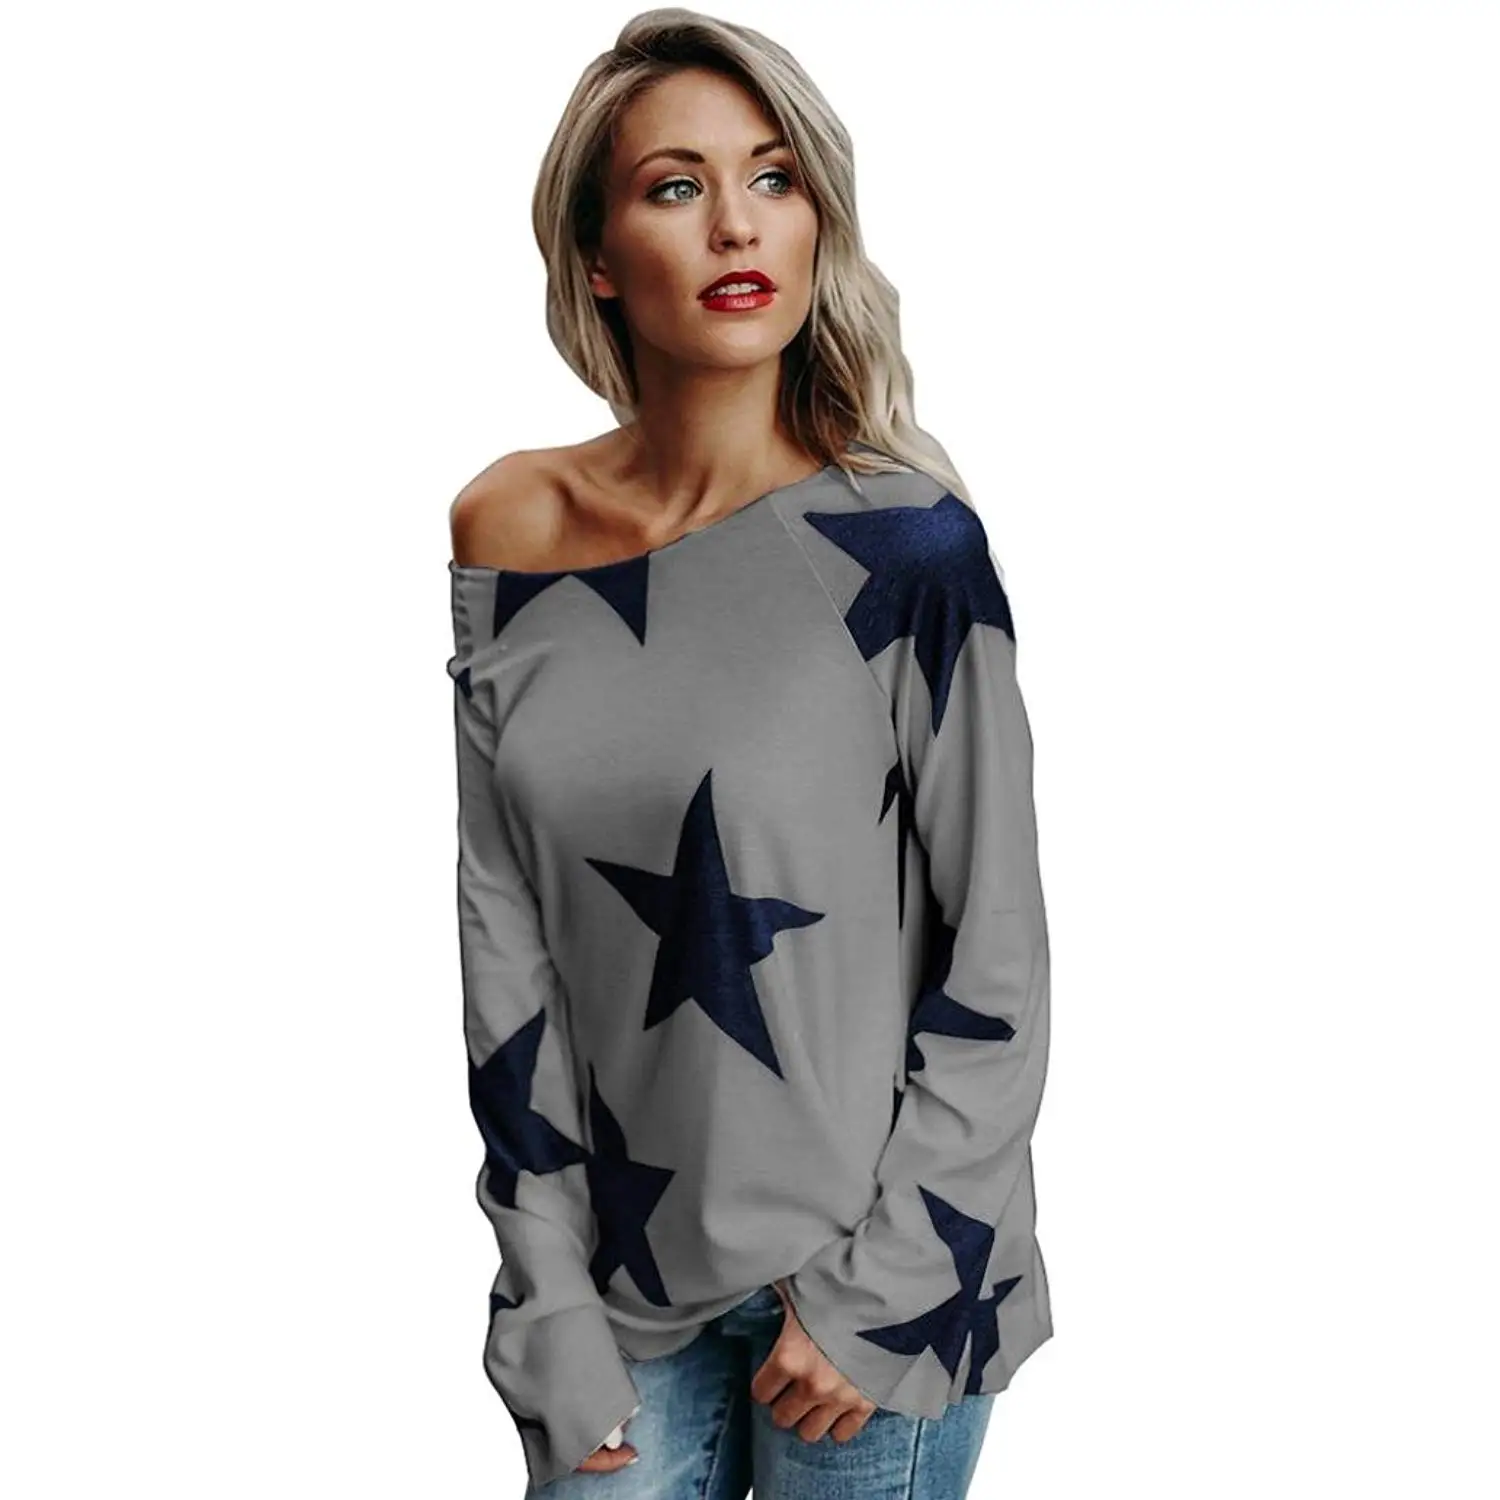 Cheap Sexy Girl Sweatshirt, find Sexy Girl Sweatshirt deals on line at ...